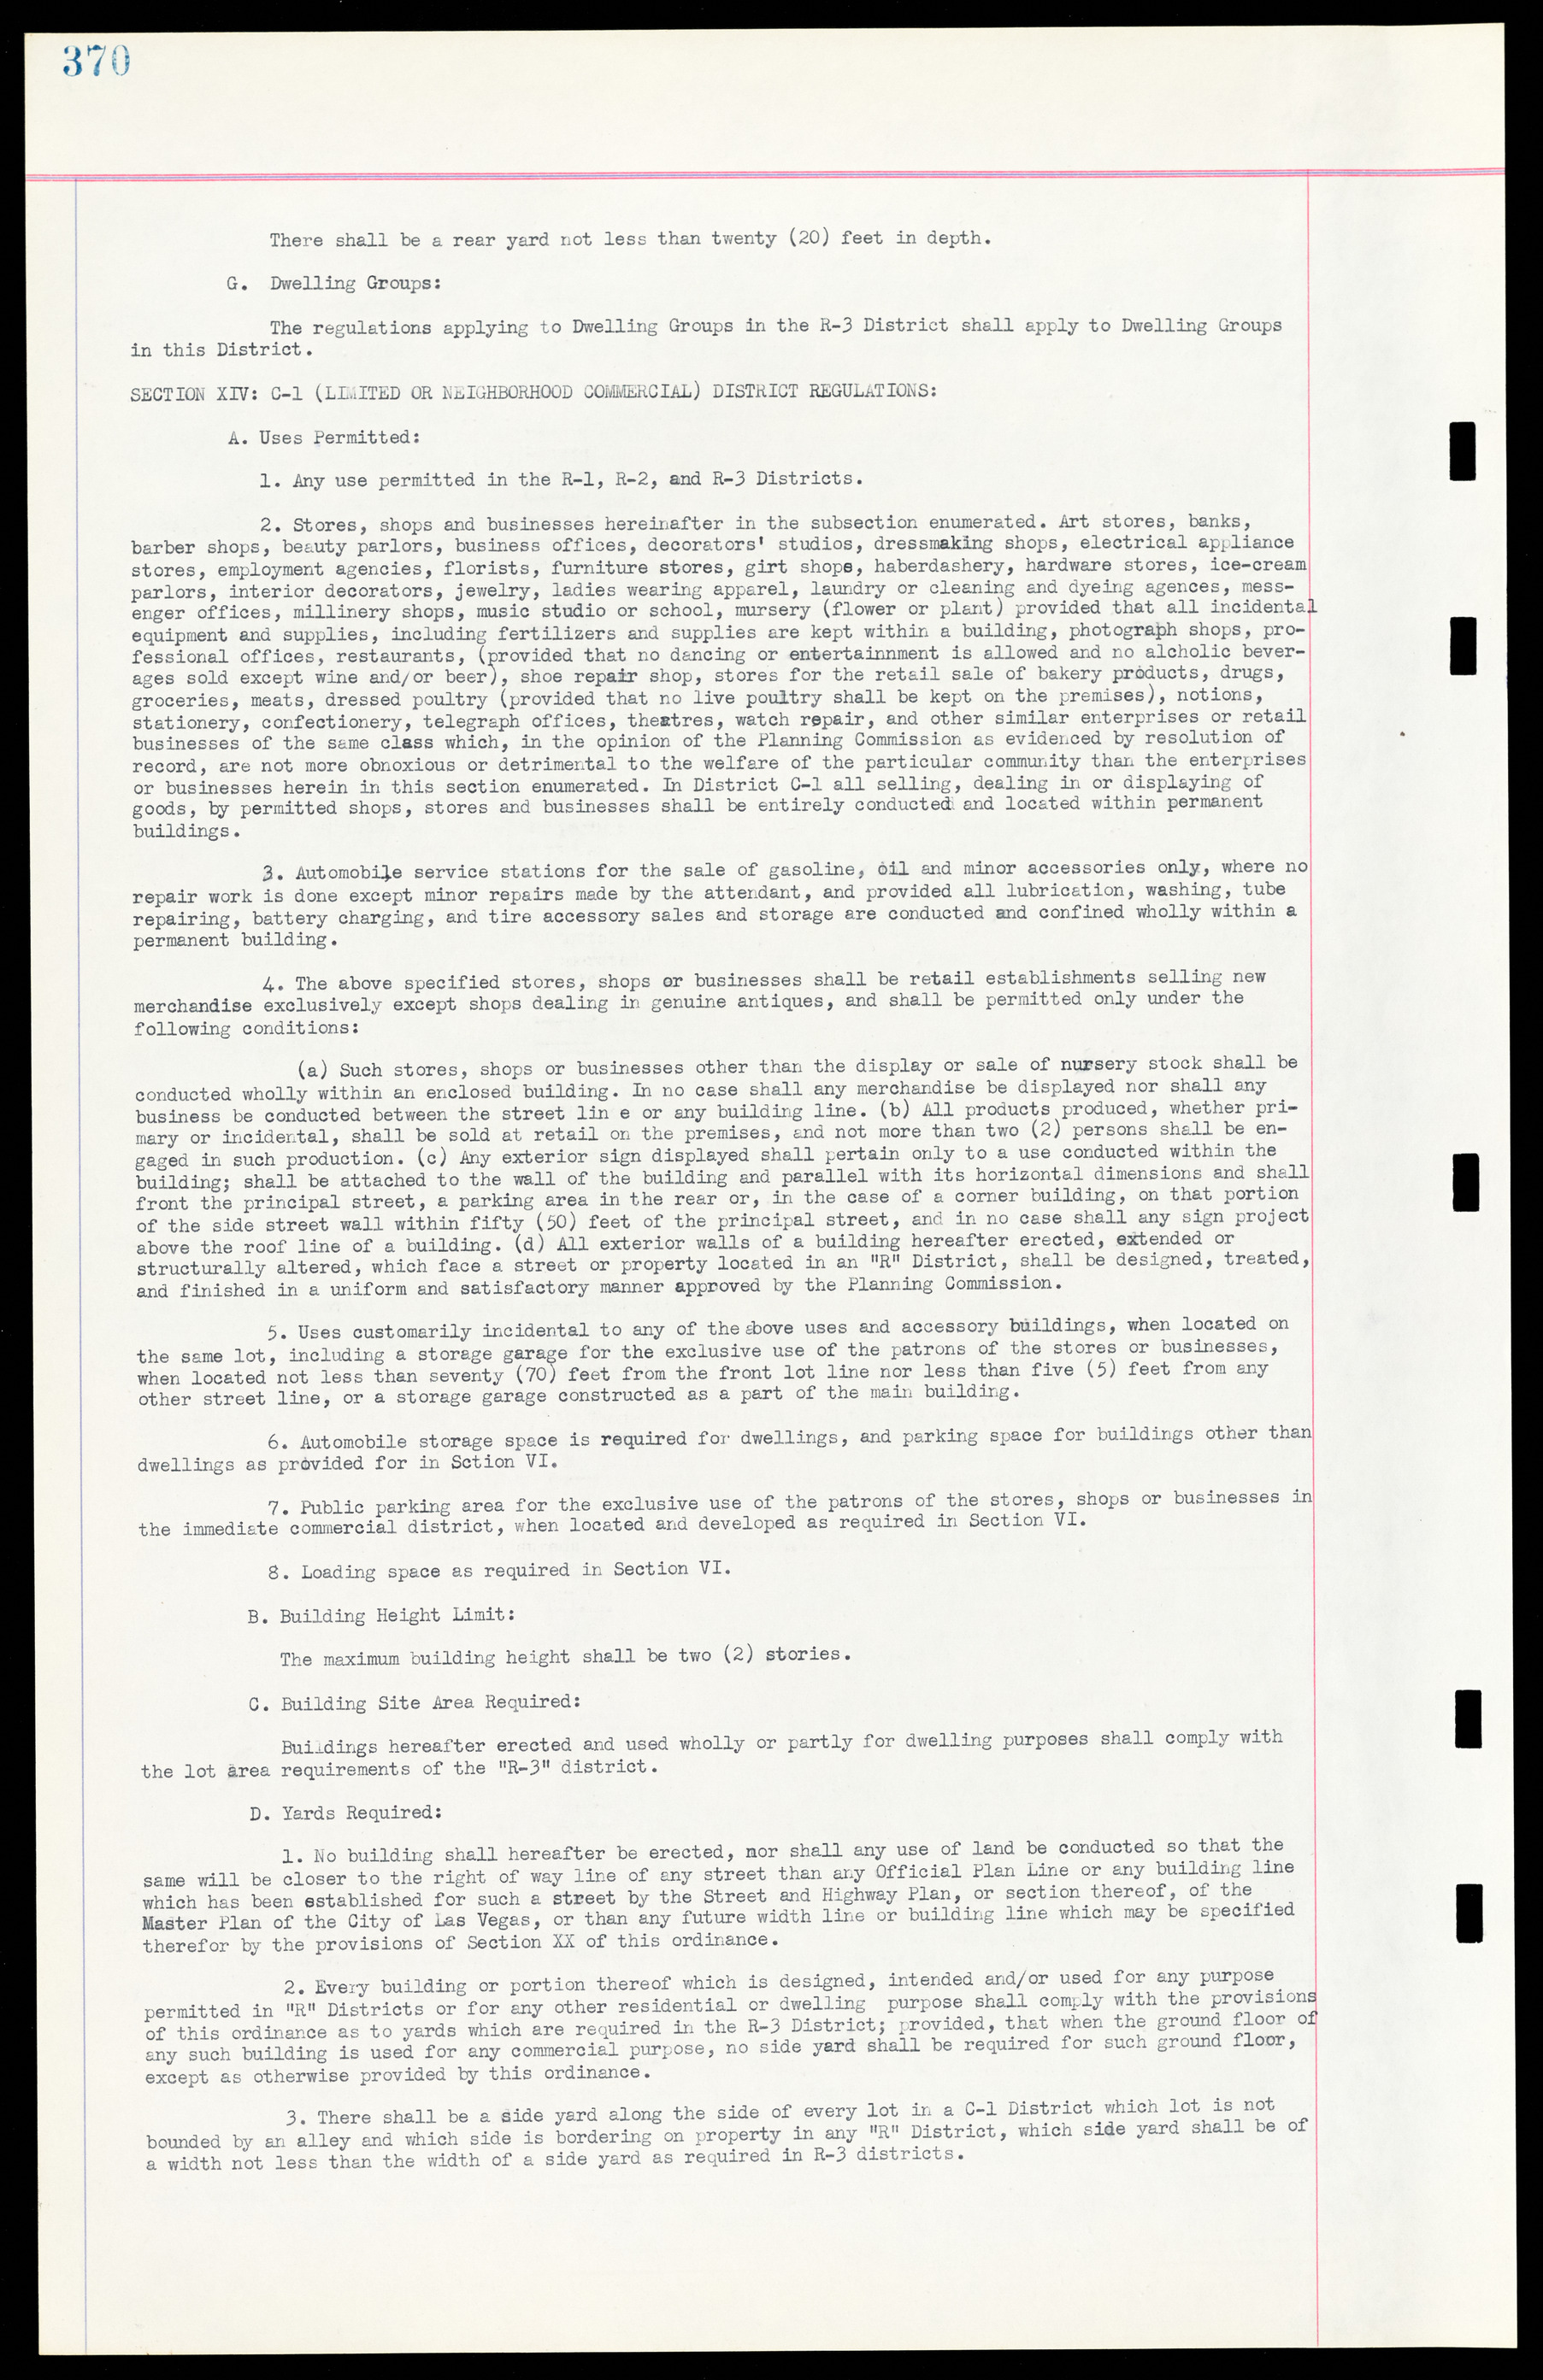 Las Vegas City Ordinances, March 31, 1933 to October 25, 1950, lvc000014-399